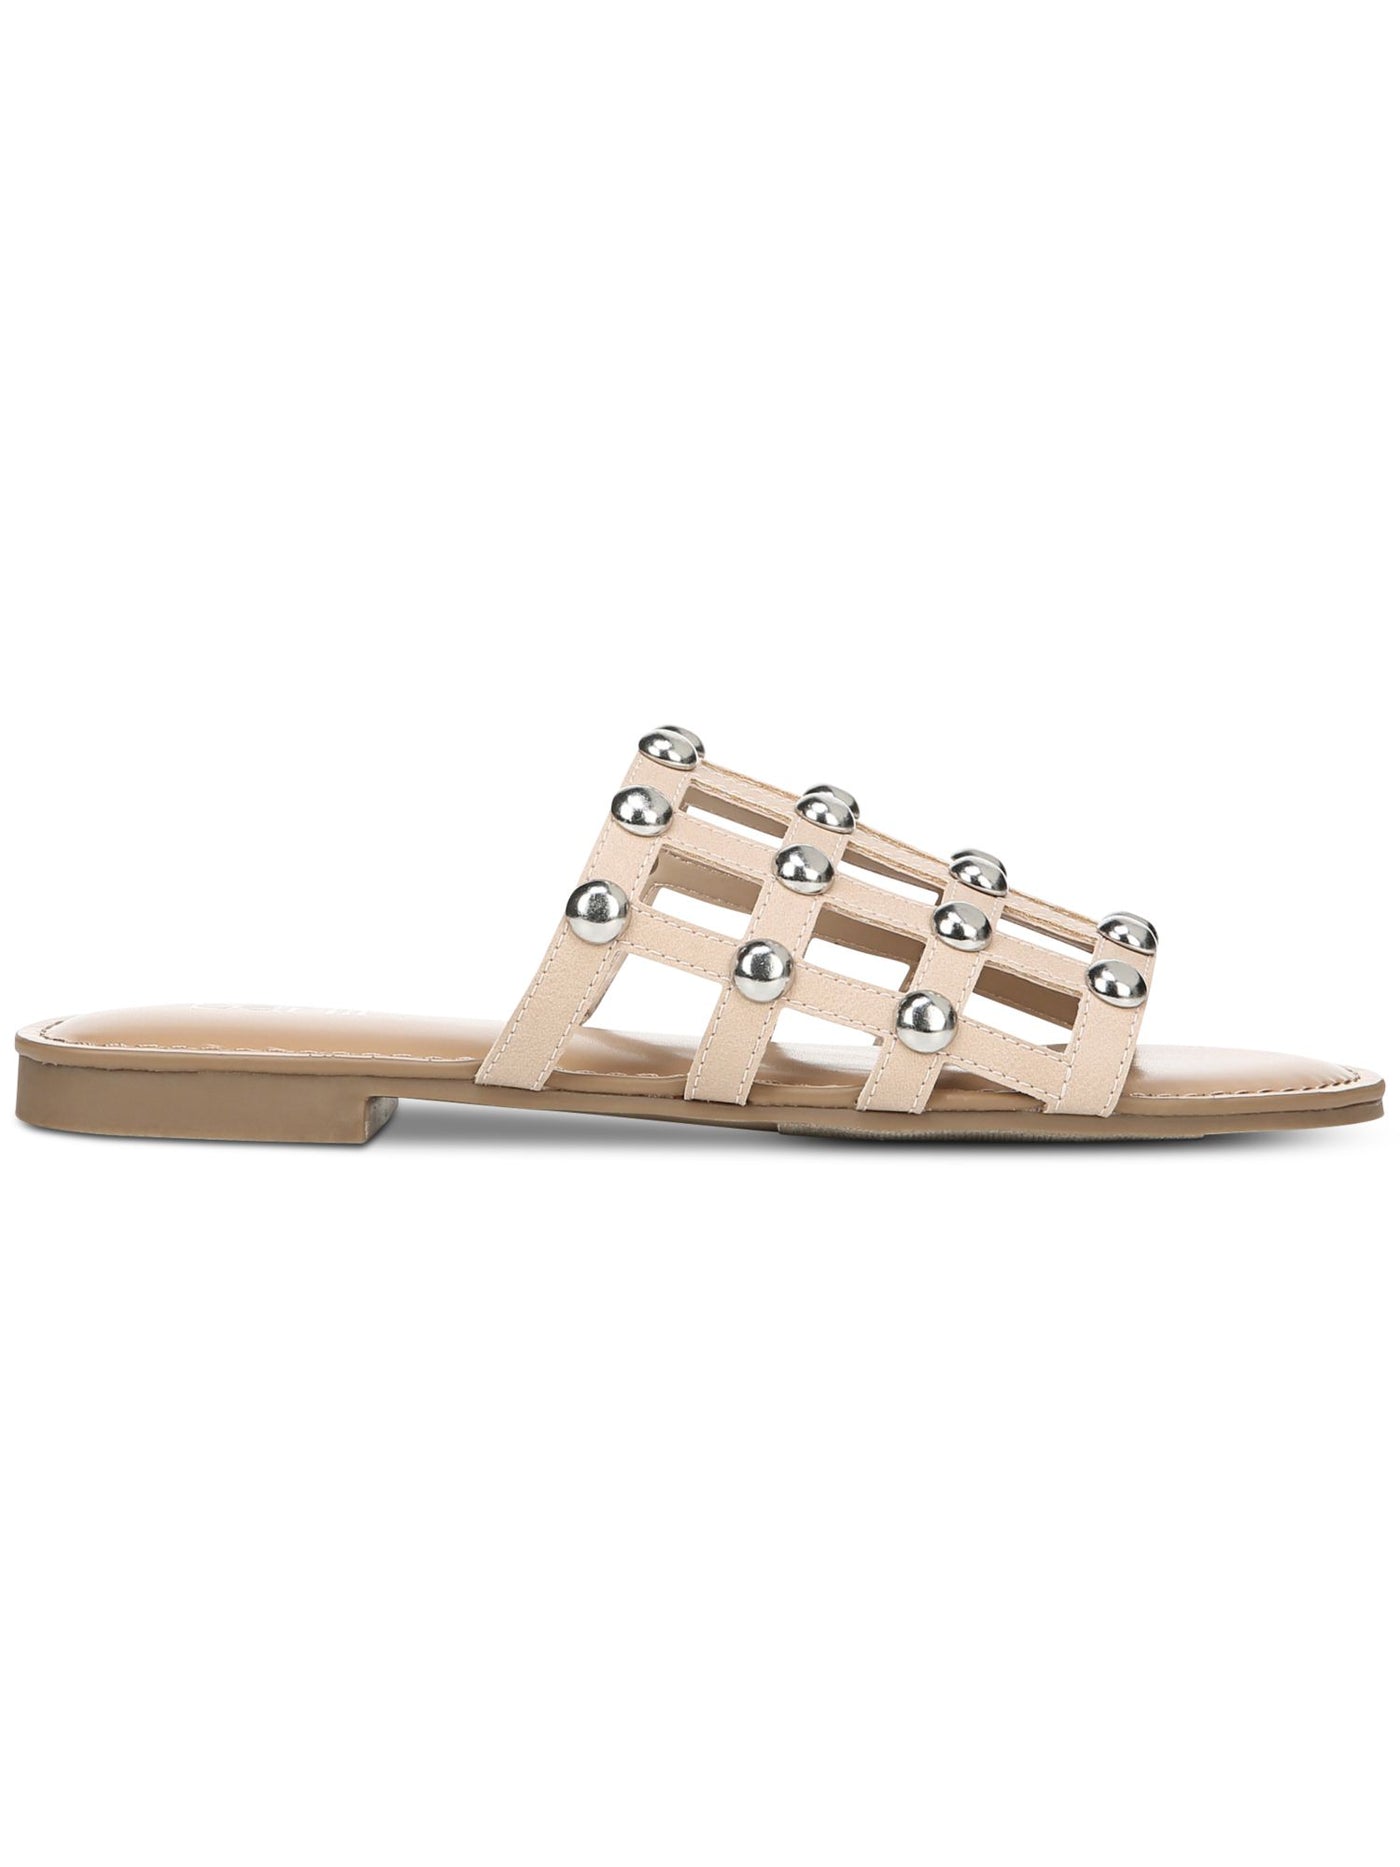 BAR III Womens Beige Gladiator Inspired Studded Pecanna Round Toe Slip On Slide Sandals Shoes 5.5